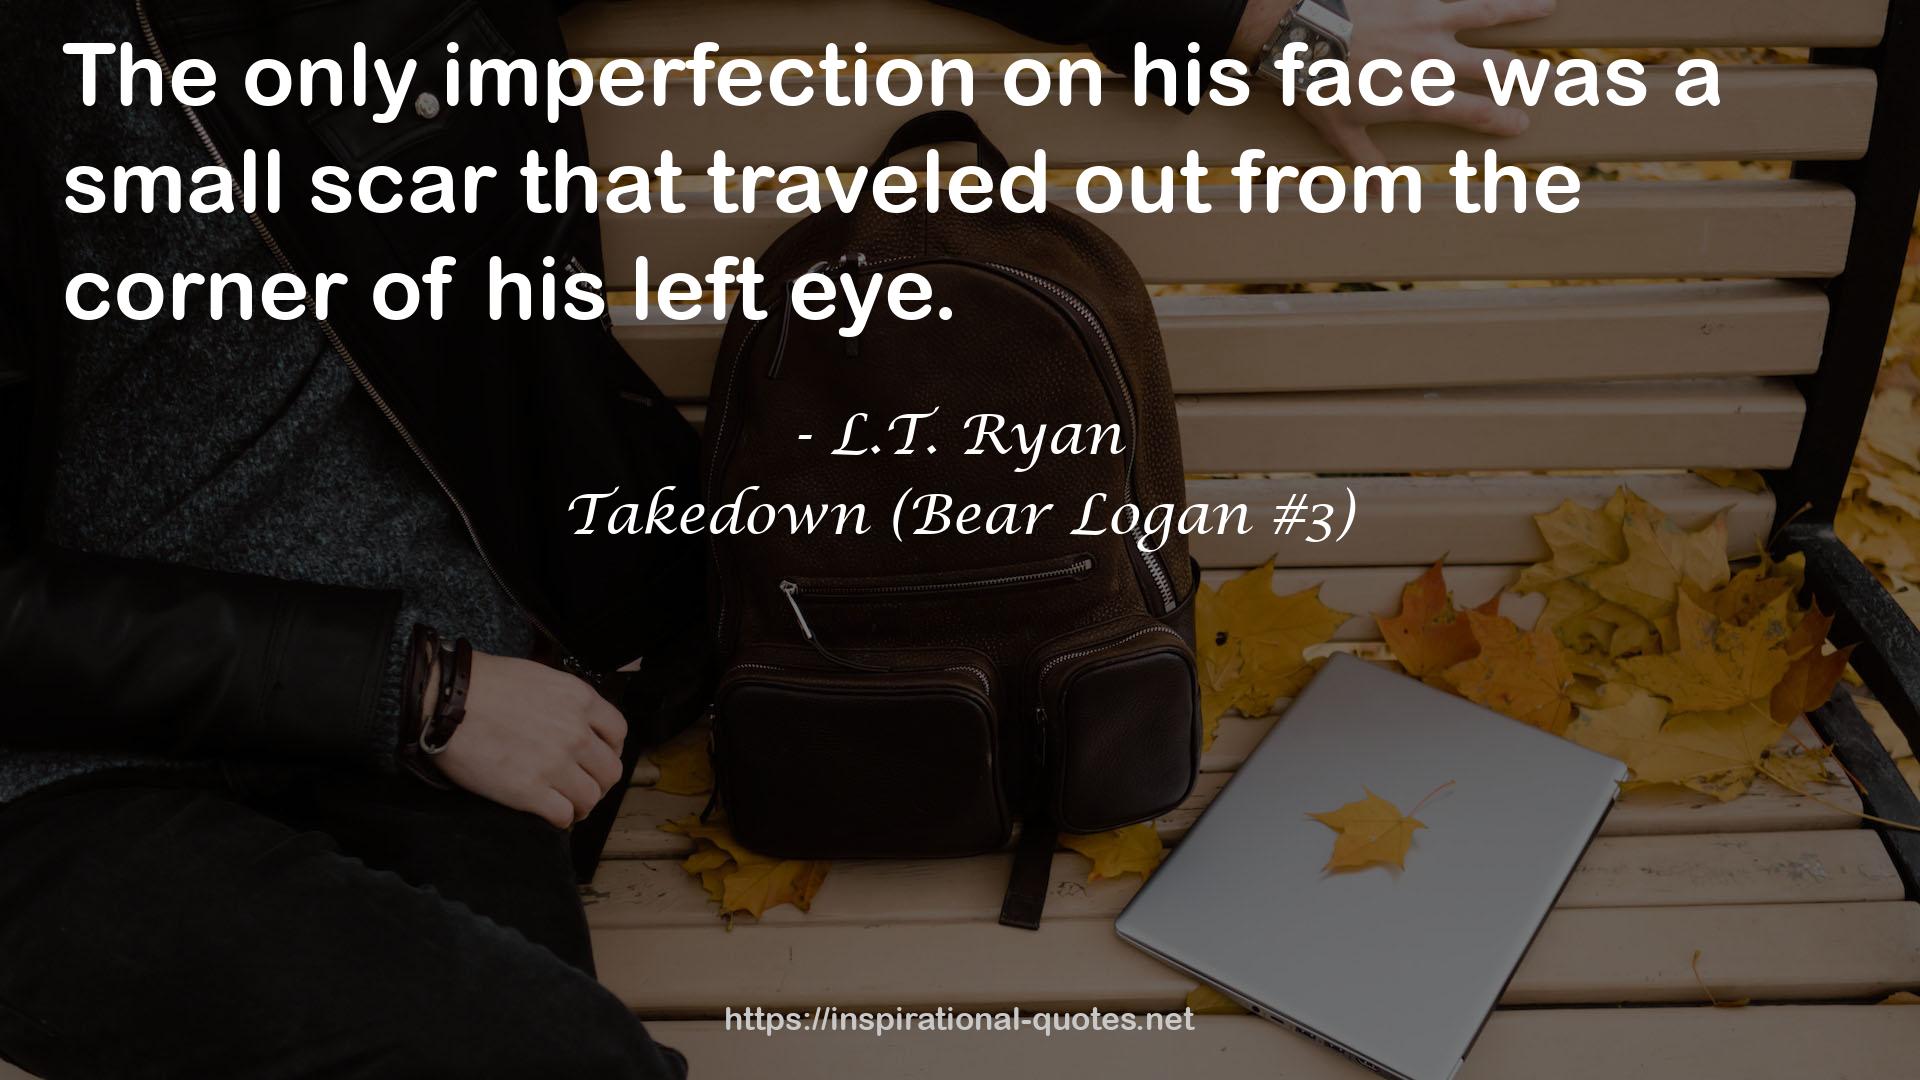 Takedown (Bear Logan #3) QUOTES